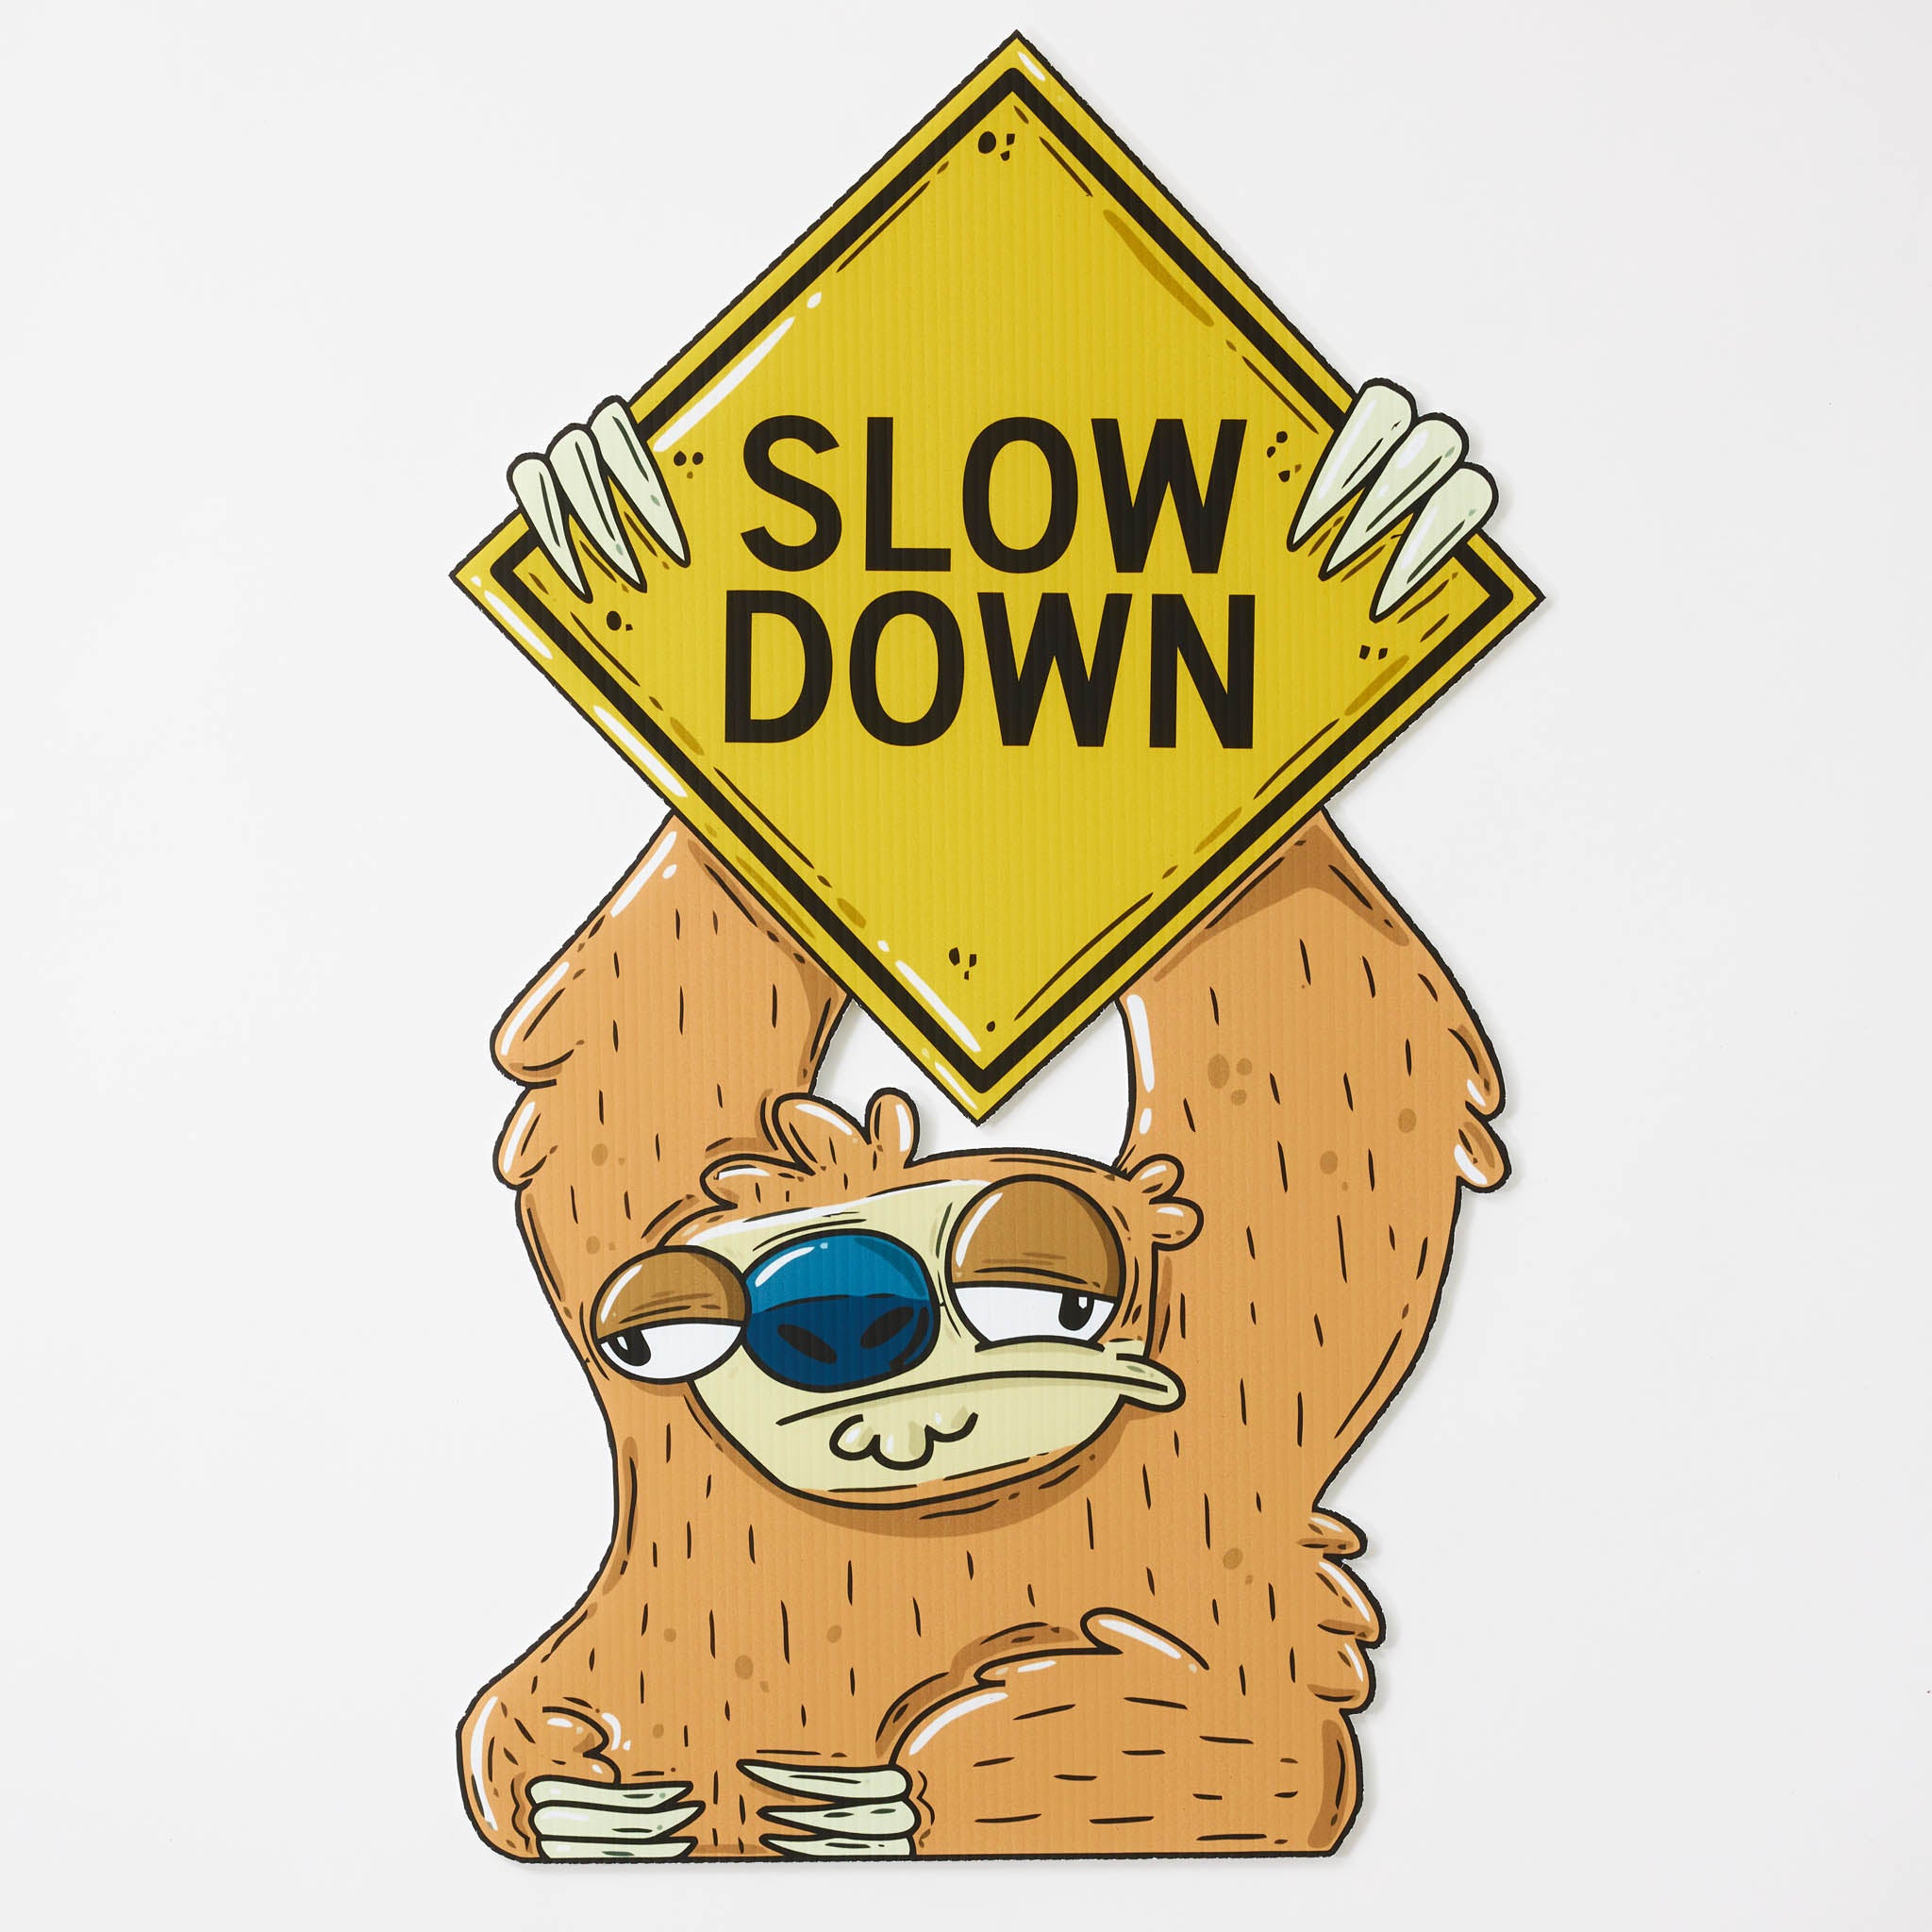 Sofia the Sloth | "Slow Down" Yard Sign